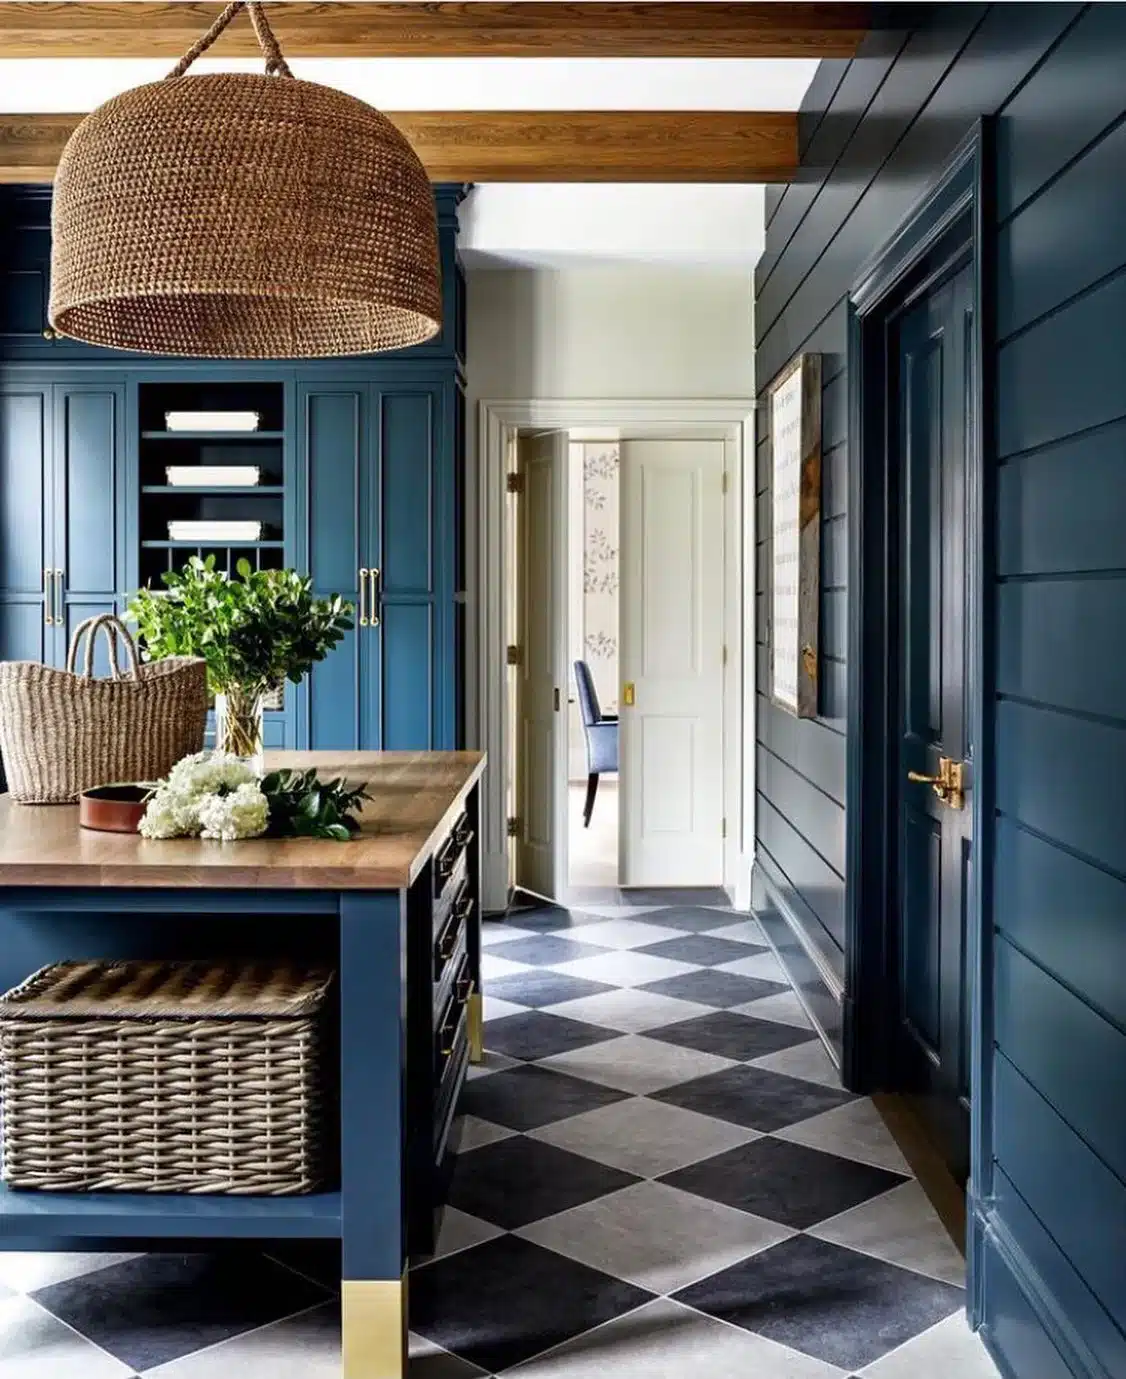 Navy Blue Kitchen Cabinets